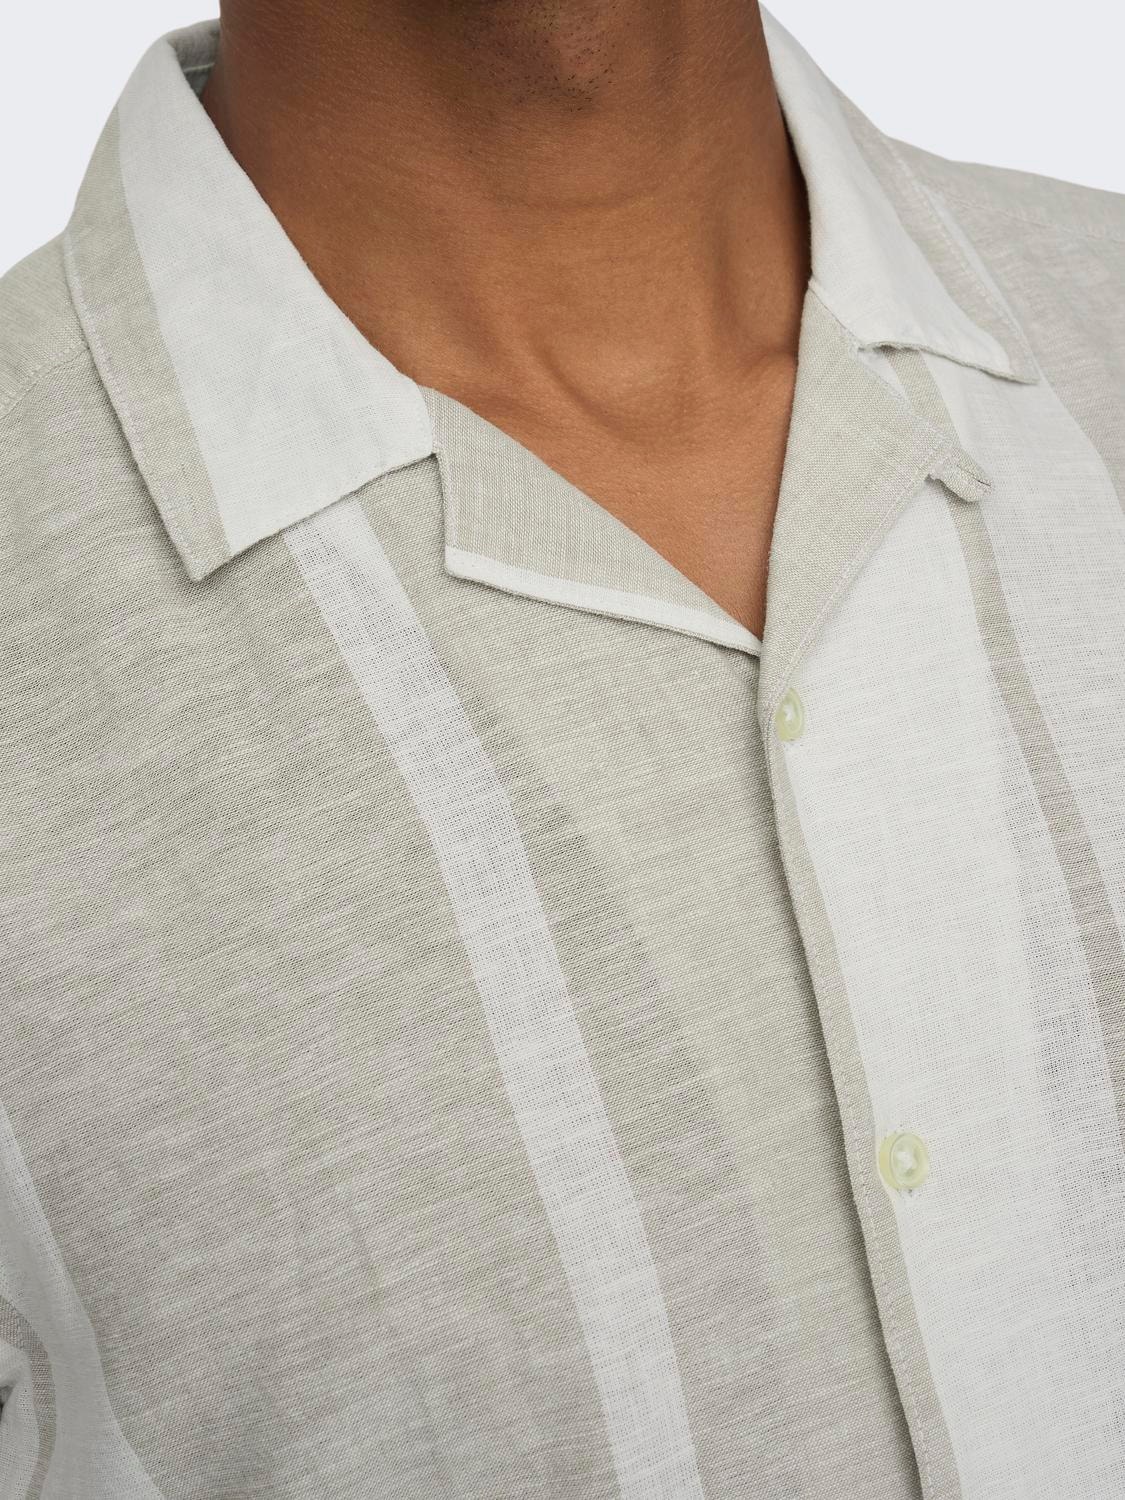 ONLY & SONS Normal geschnitten Resort Kragen Hemd -Vintage Khaki - 22026109